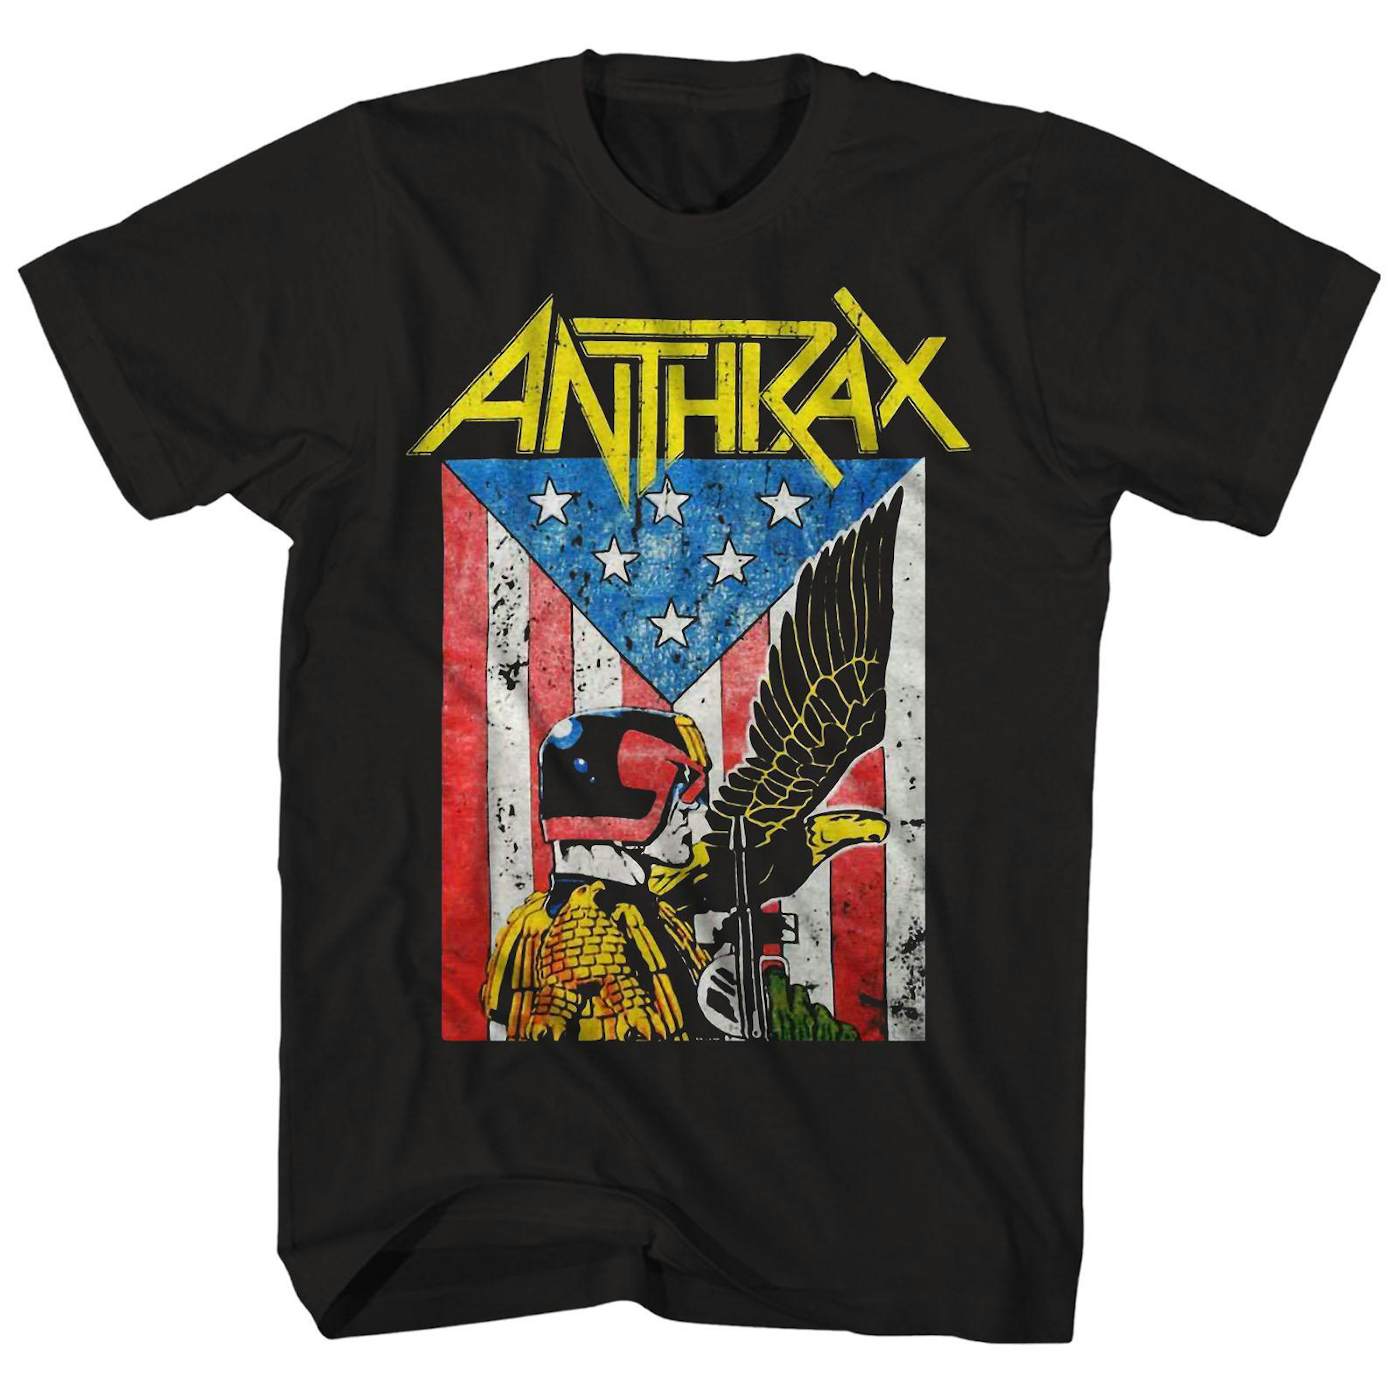 Anthrax - Superhero Lyrics